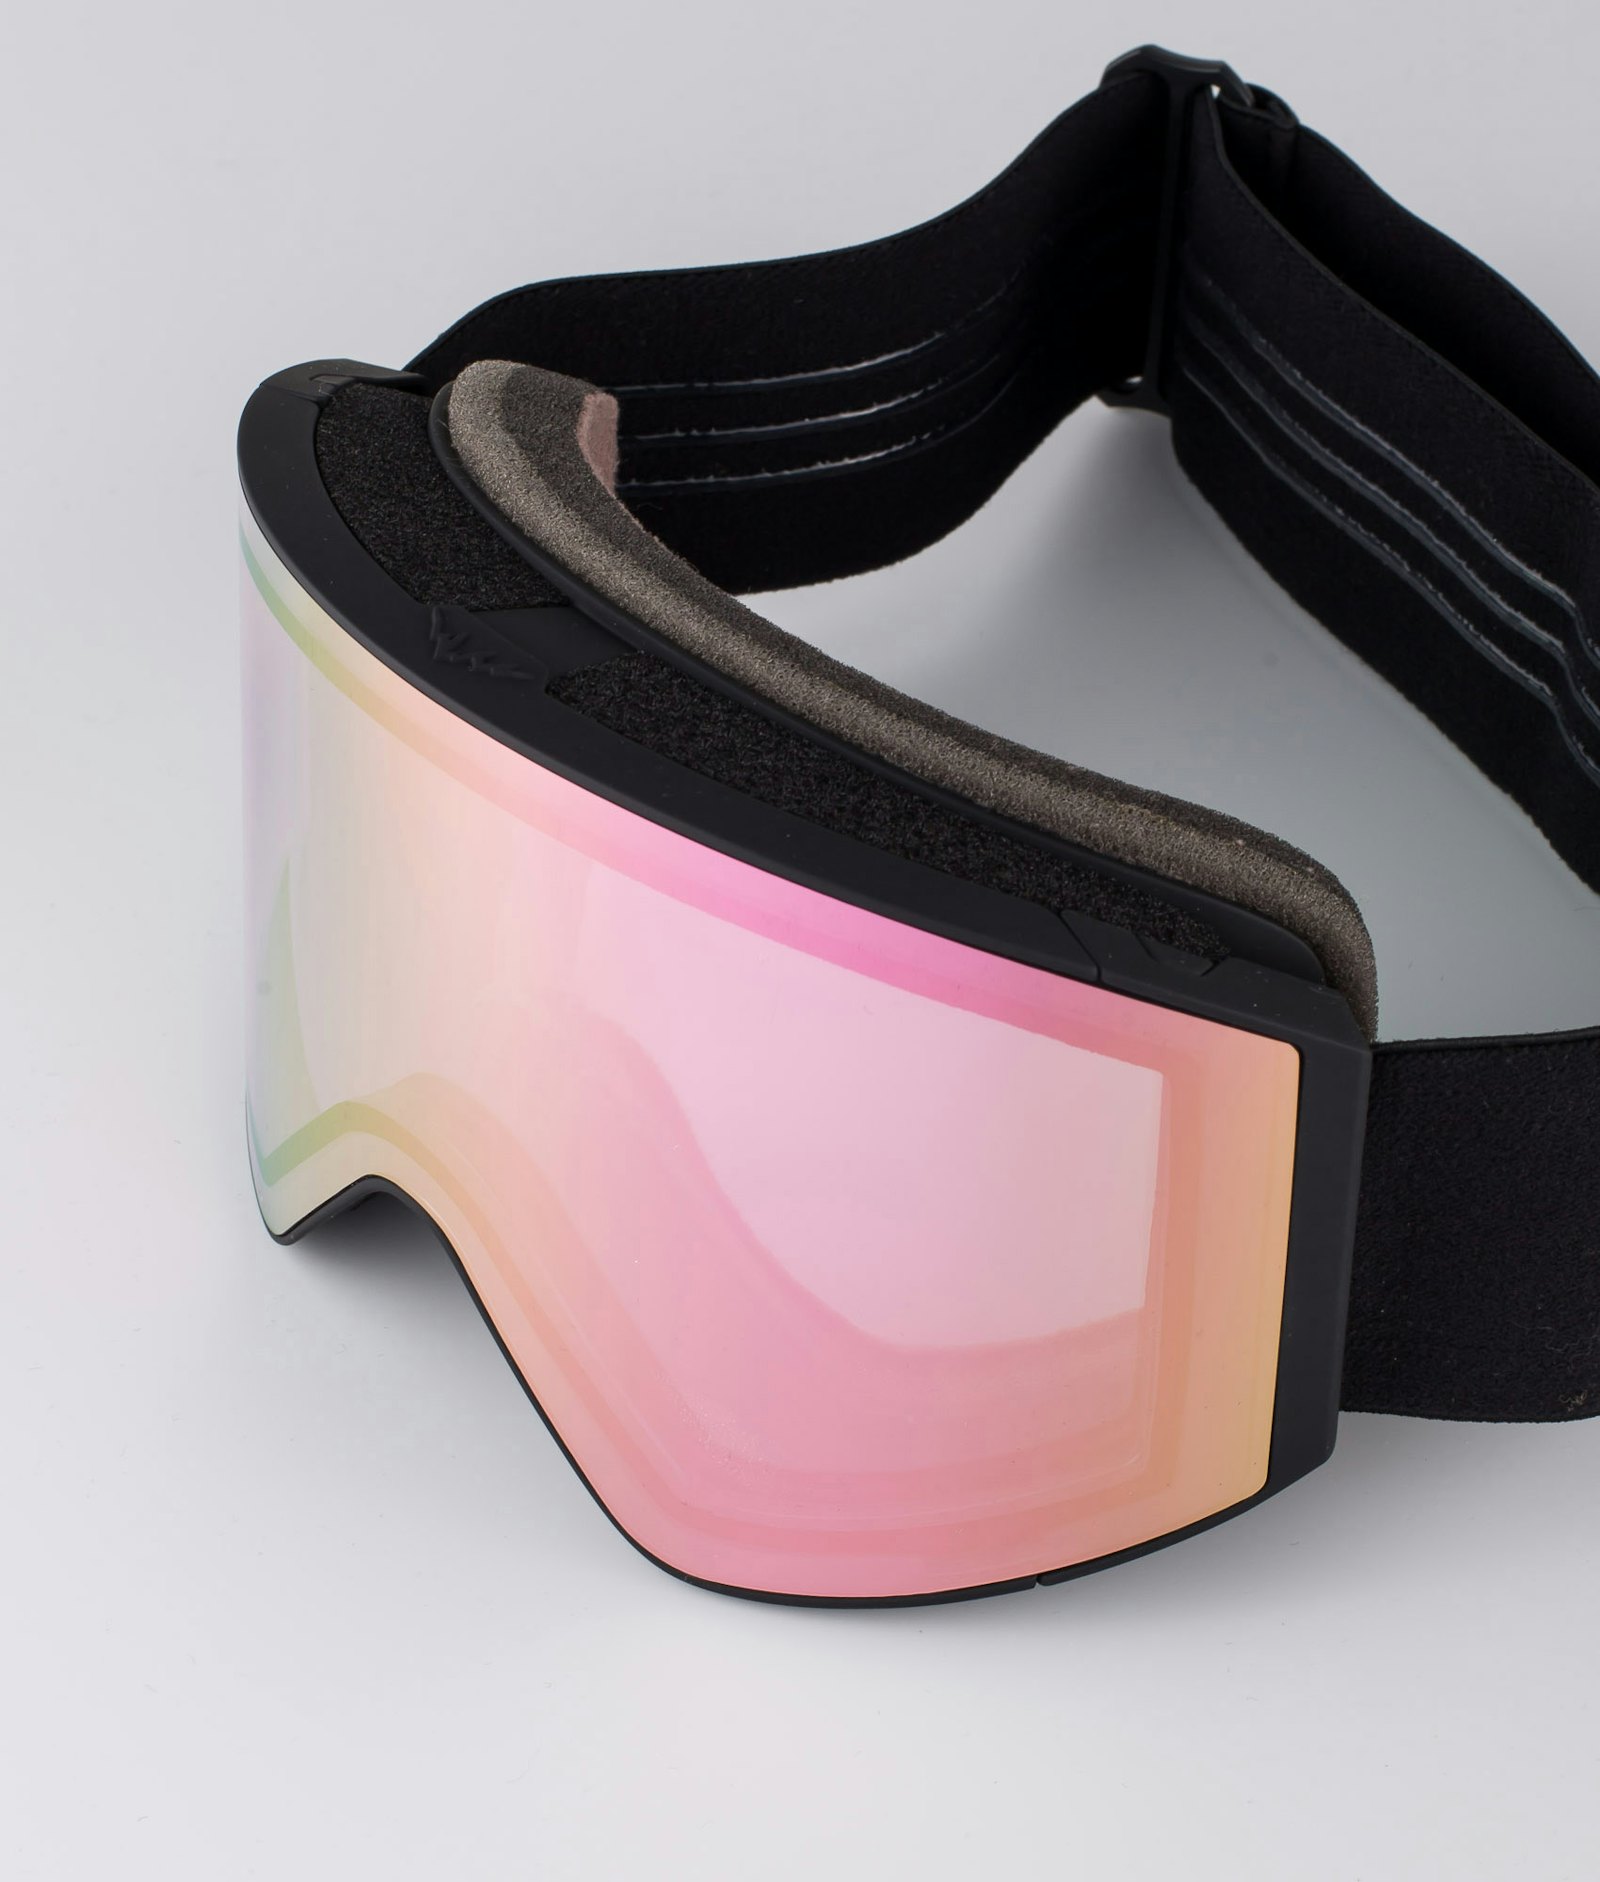 Scope 2020 Large Ski Goggles Black/Pink Sapphire, Image 4 of 6